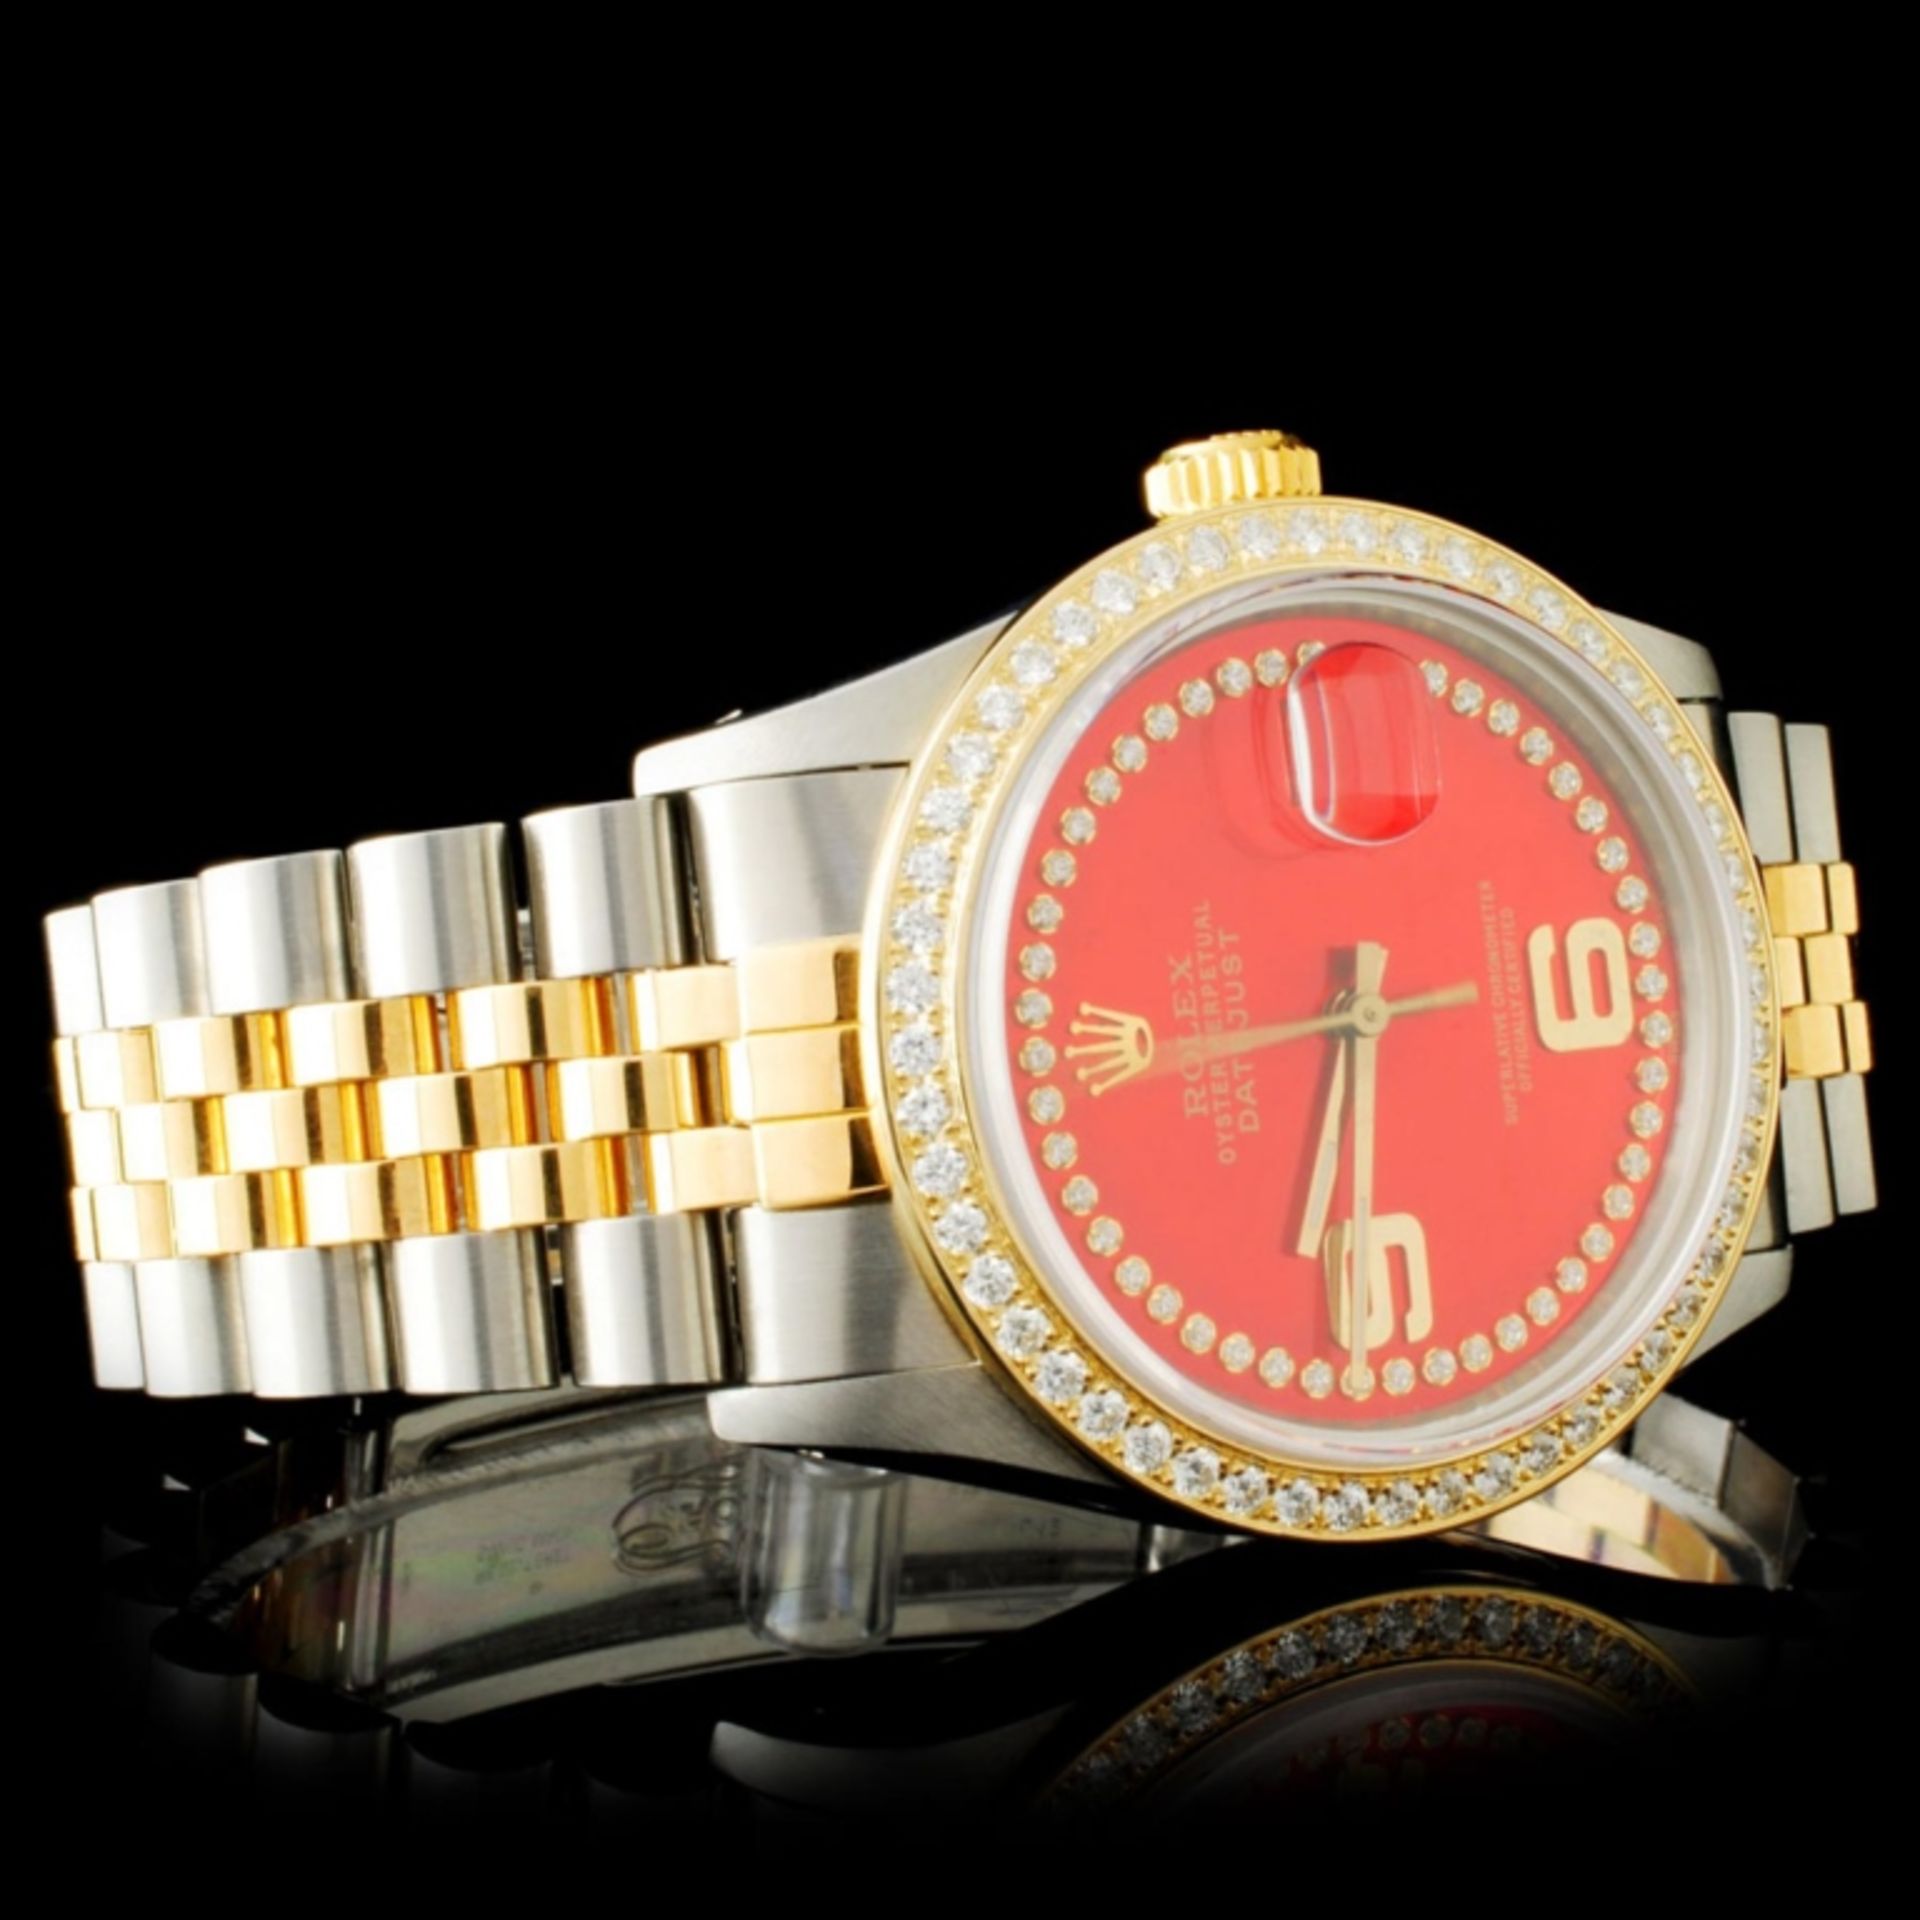 Rolex YG/SS 36MM DateJust Diamond Watch - Image 3 of 5